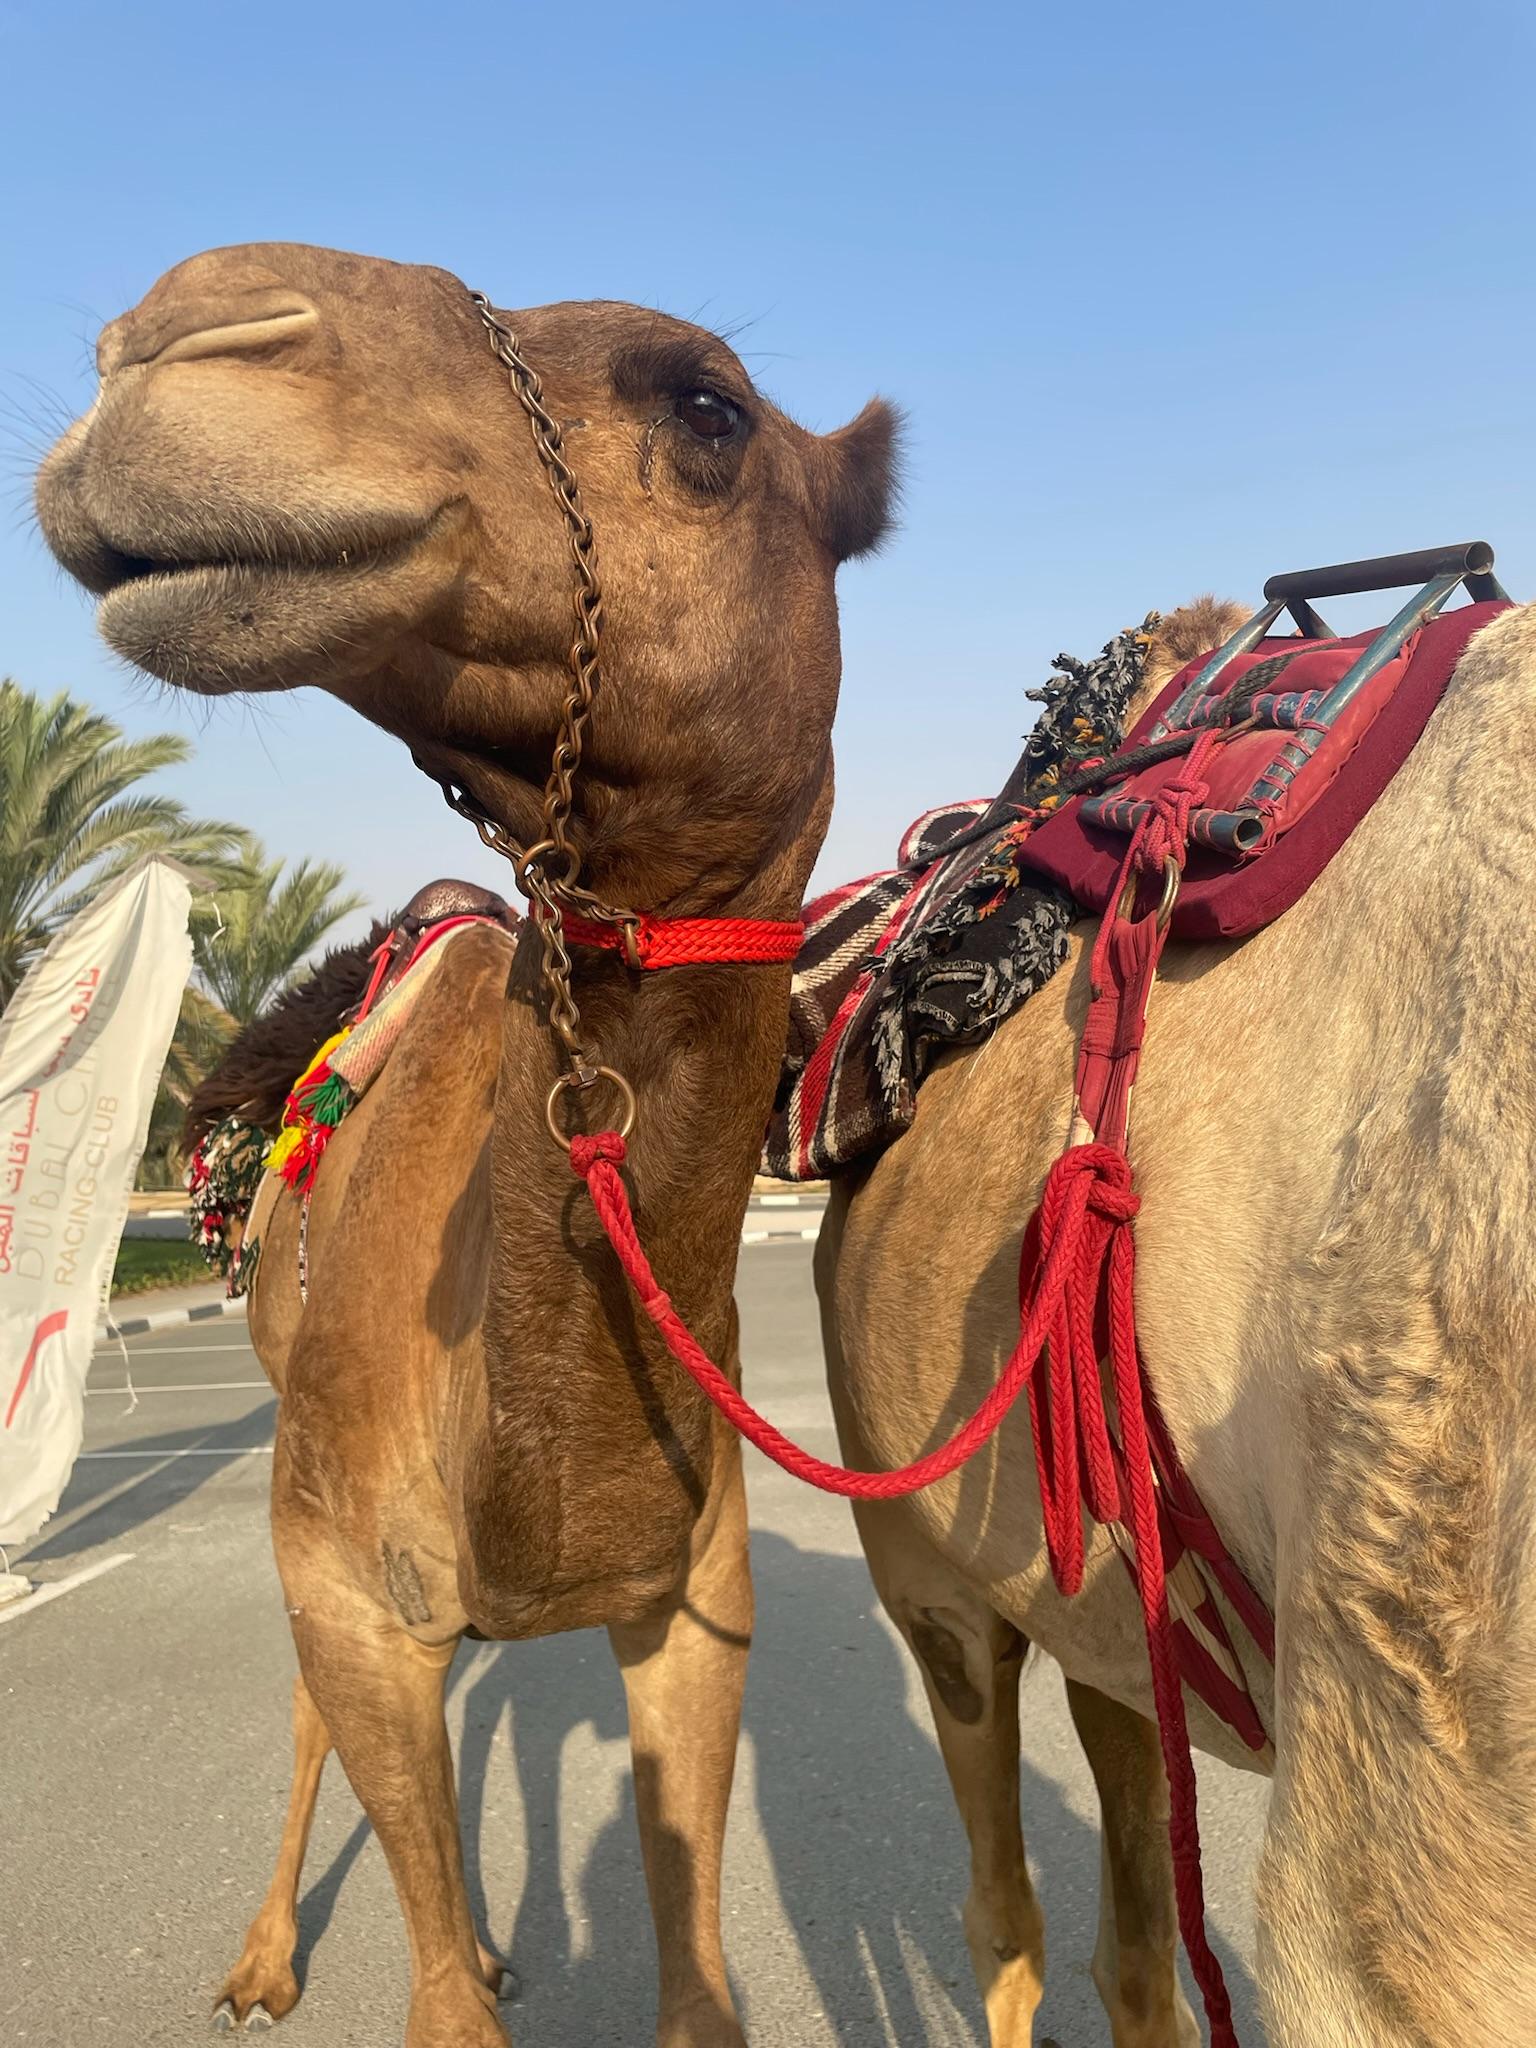 close-up photo of a camel